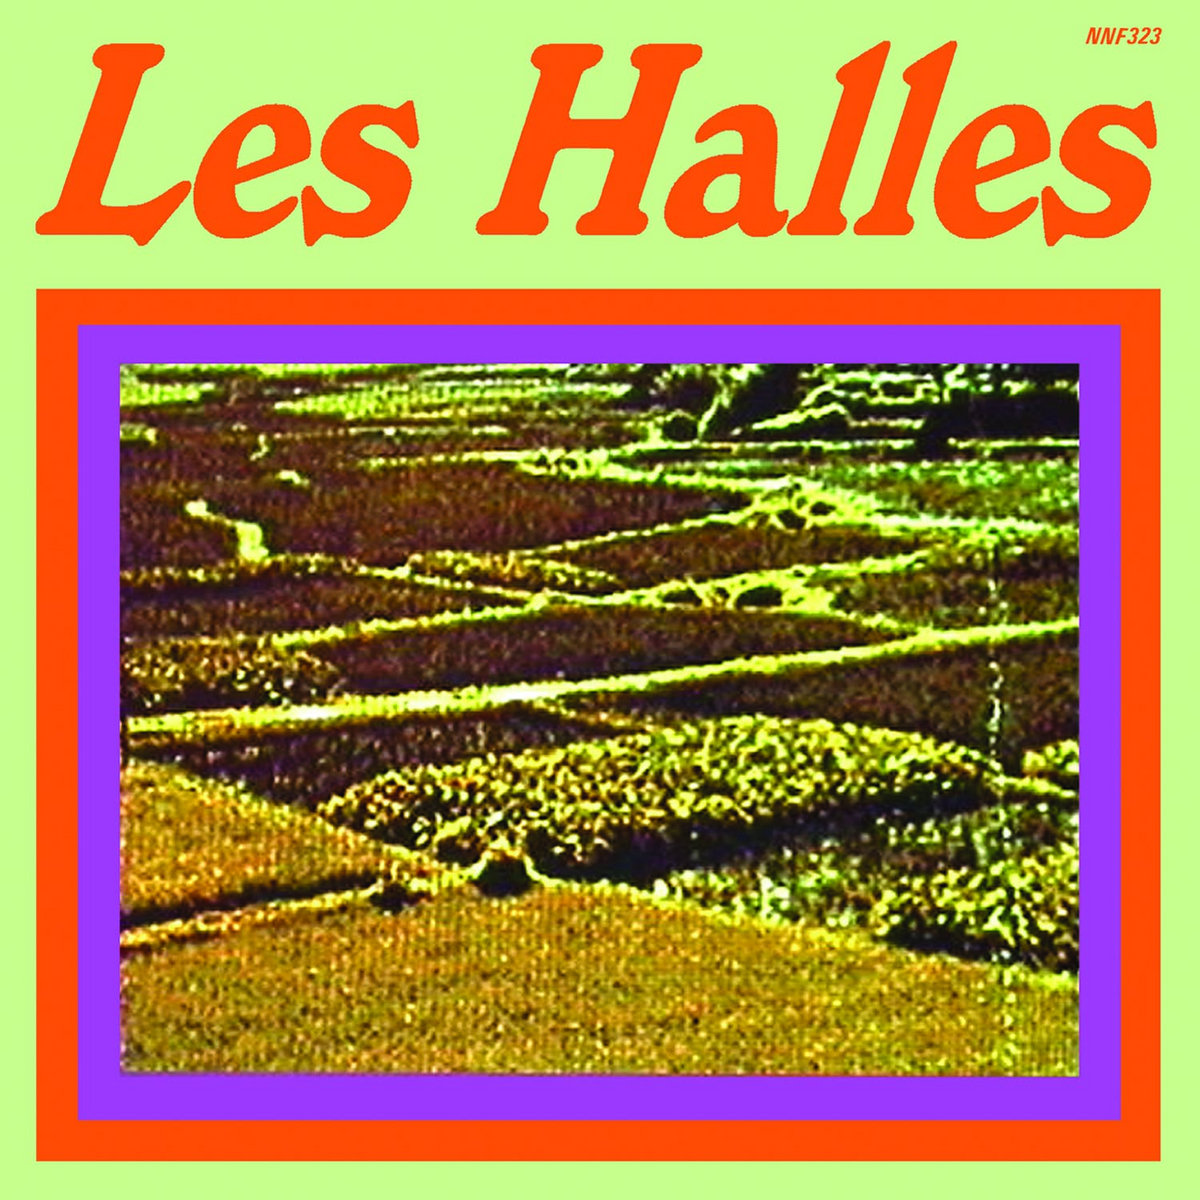 Official album artwork for Les Halles "Transient."